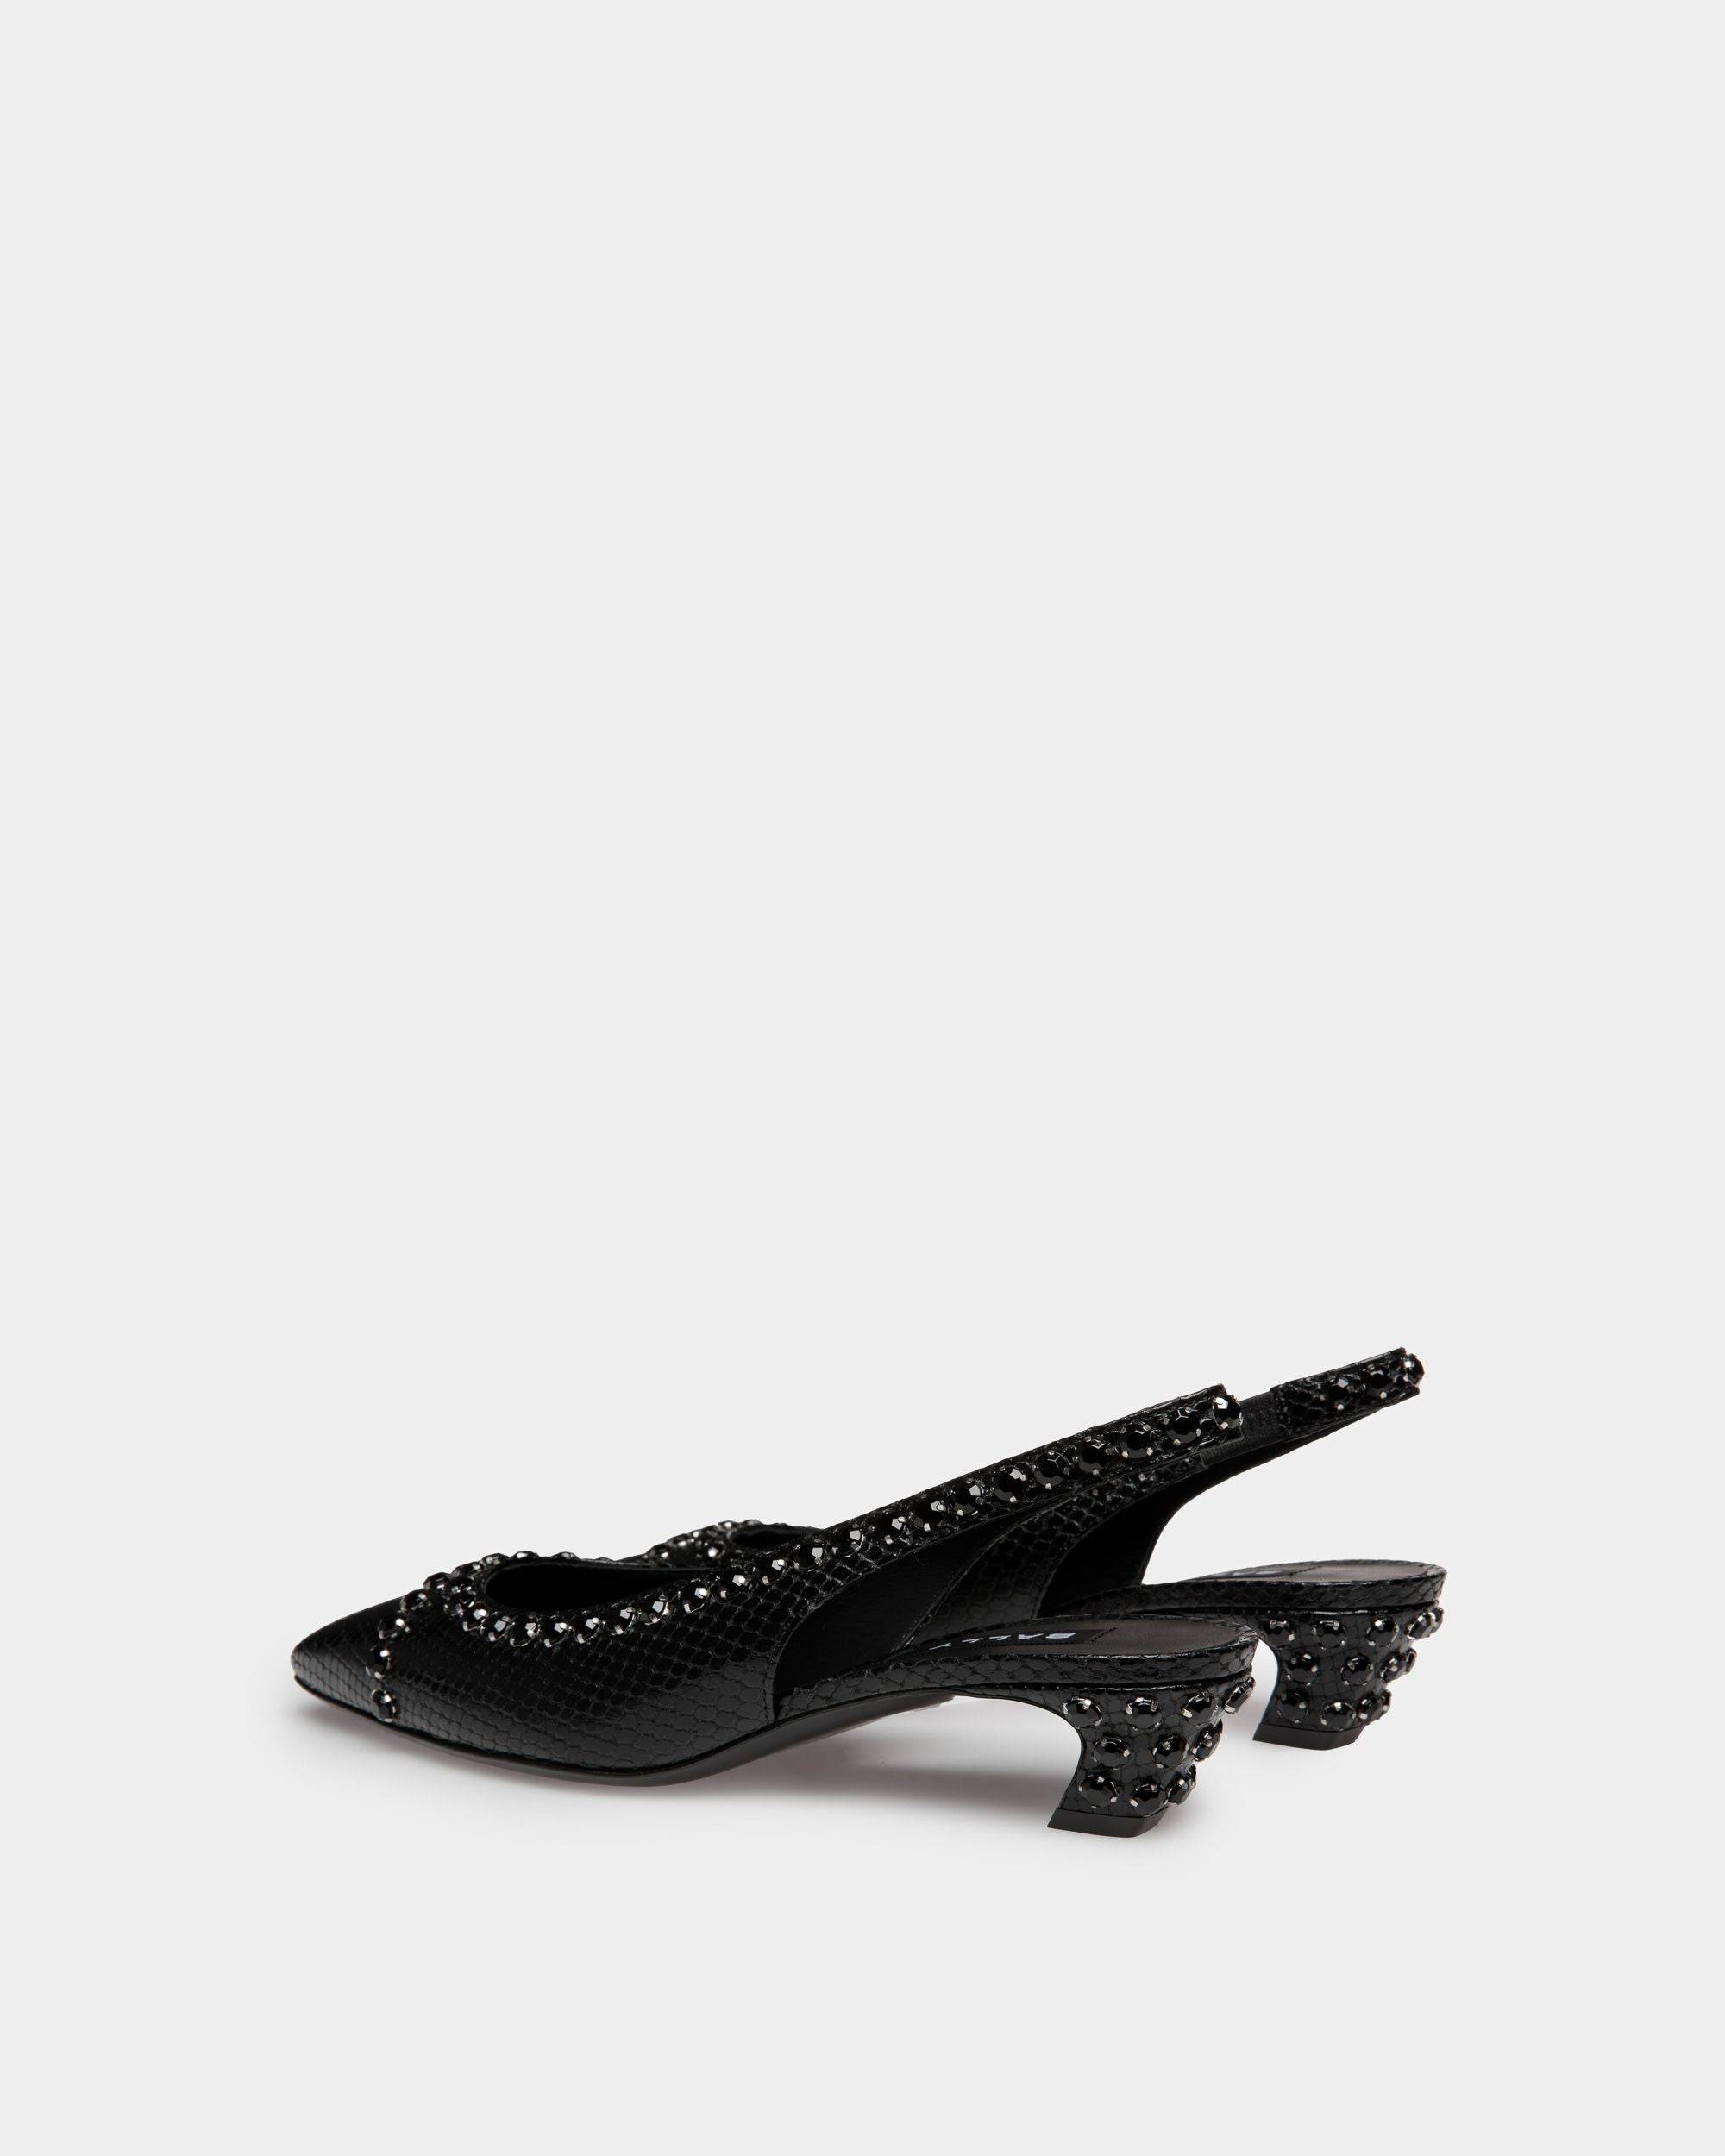 Sylt | Women's Slingback Pump in Black Python Printed Leather | Bally | Still Life 3/4 Back